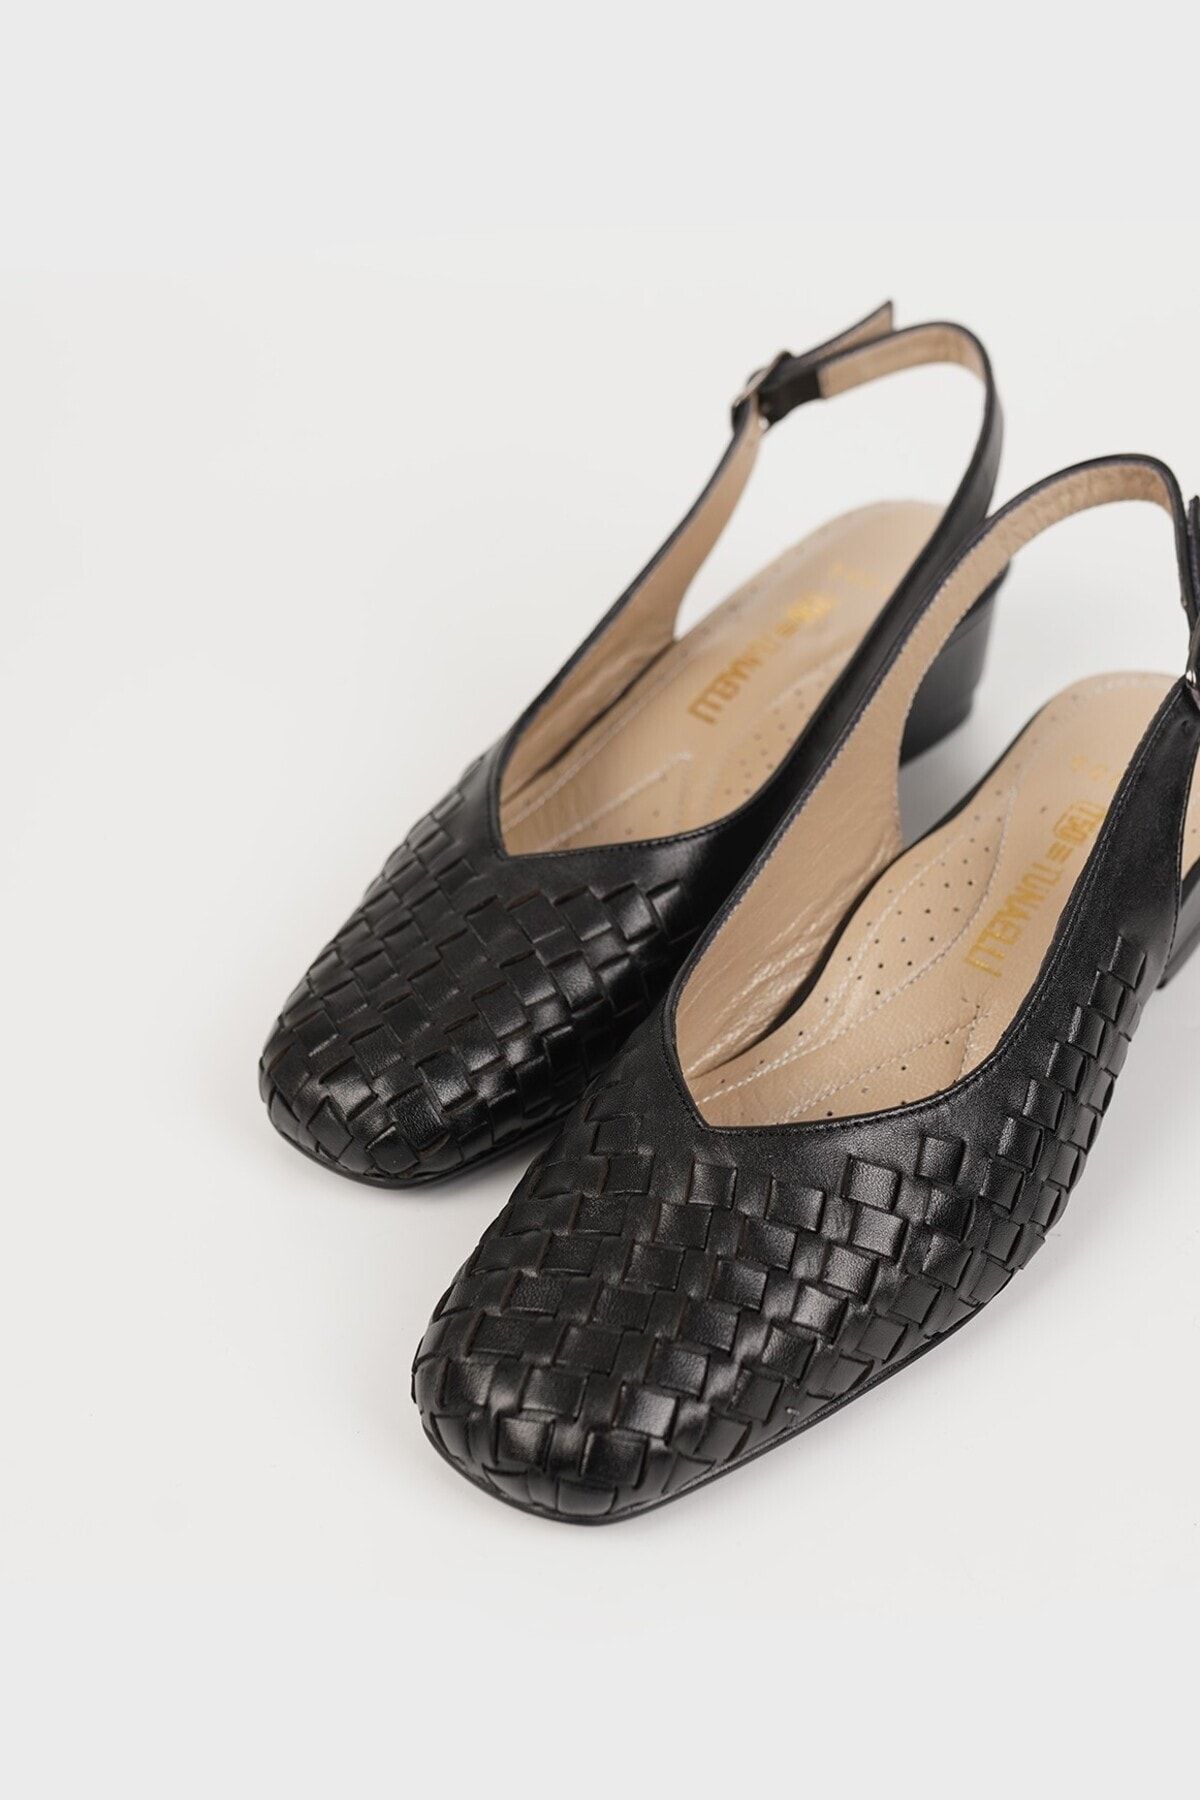 TUNAELLİ کفش های چرمی واقعی بافته سیاه با پاشنه بلند ، اندازه 35-41-42